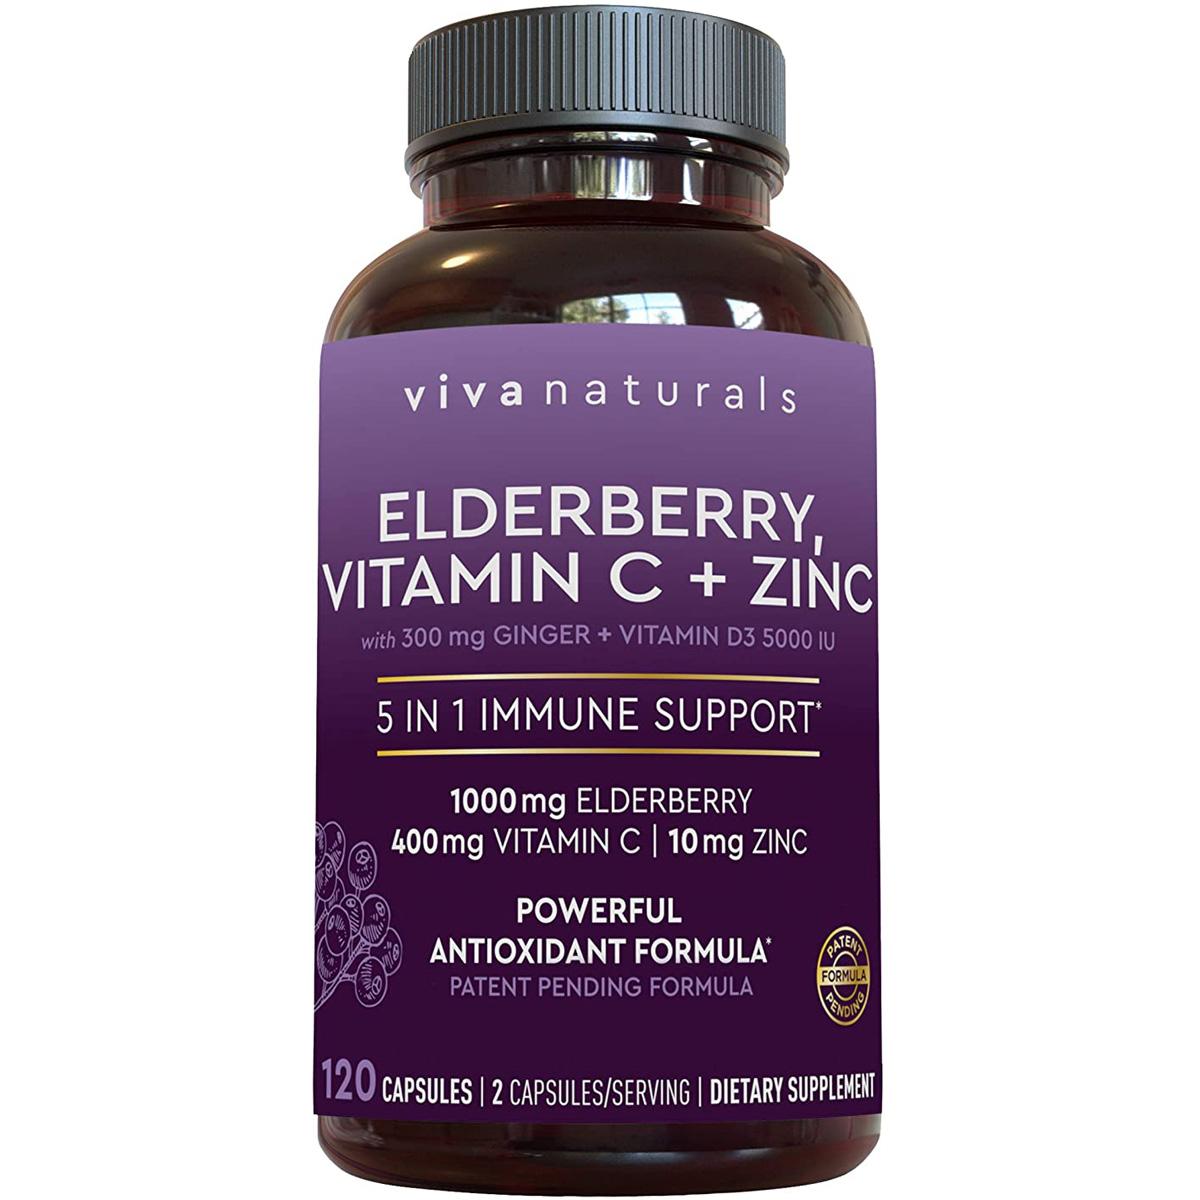 Viva Naturals Elderberry Vitamin and Zinc Supplement for $19.99 Shipped